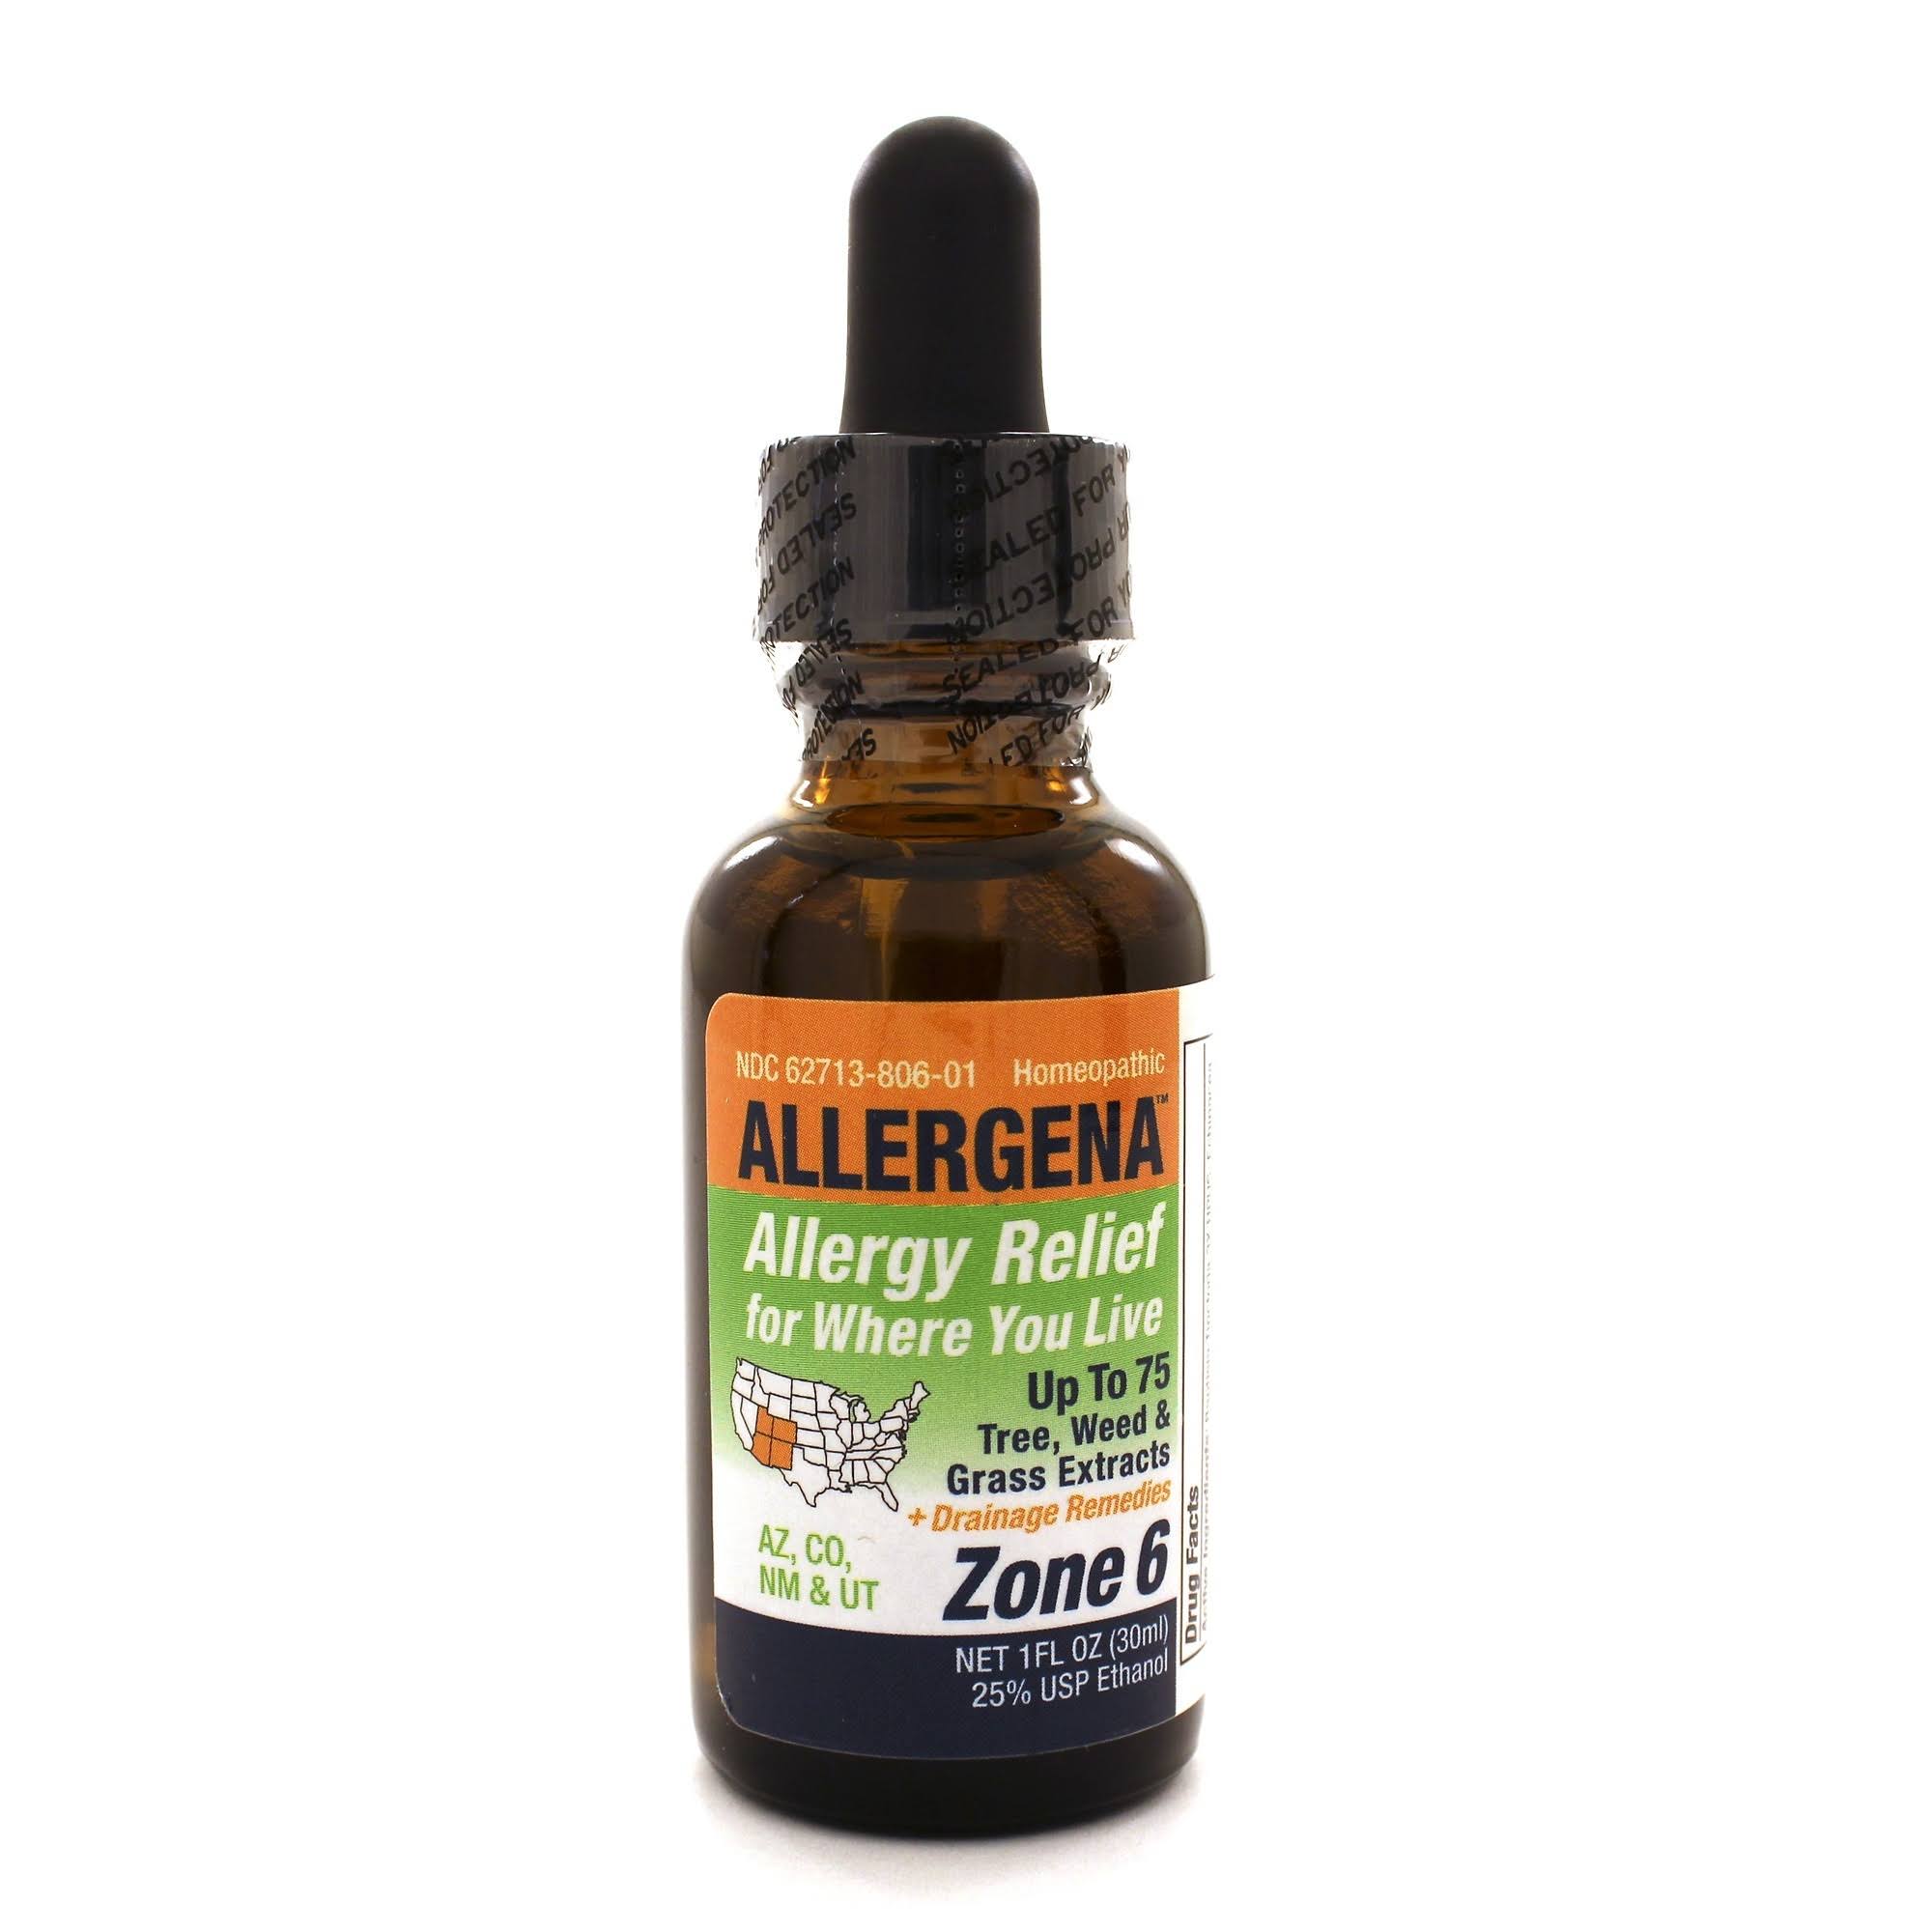 Allergena Allergy Relief Drops - Zone 6, 2oz